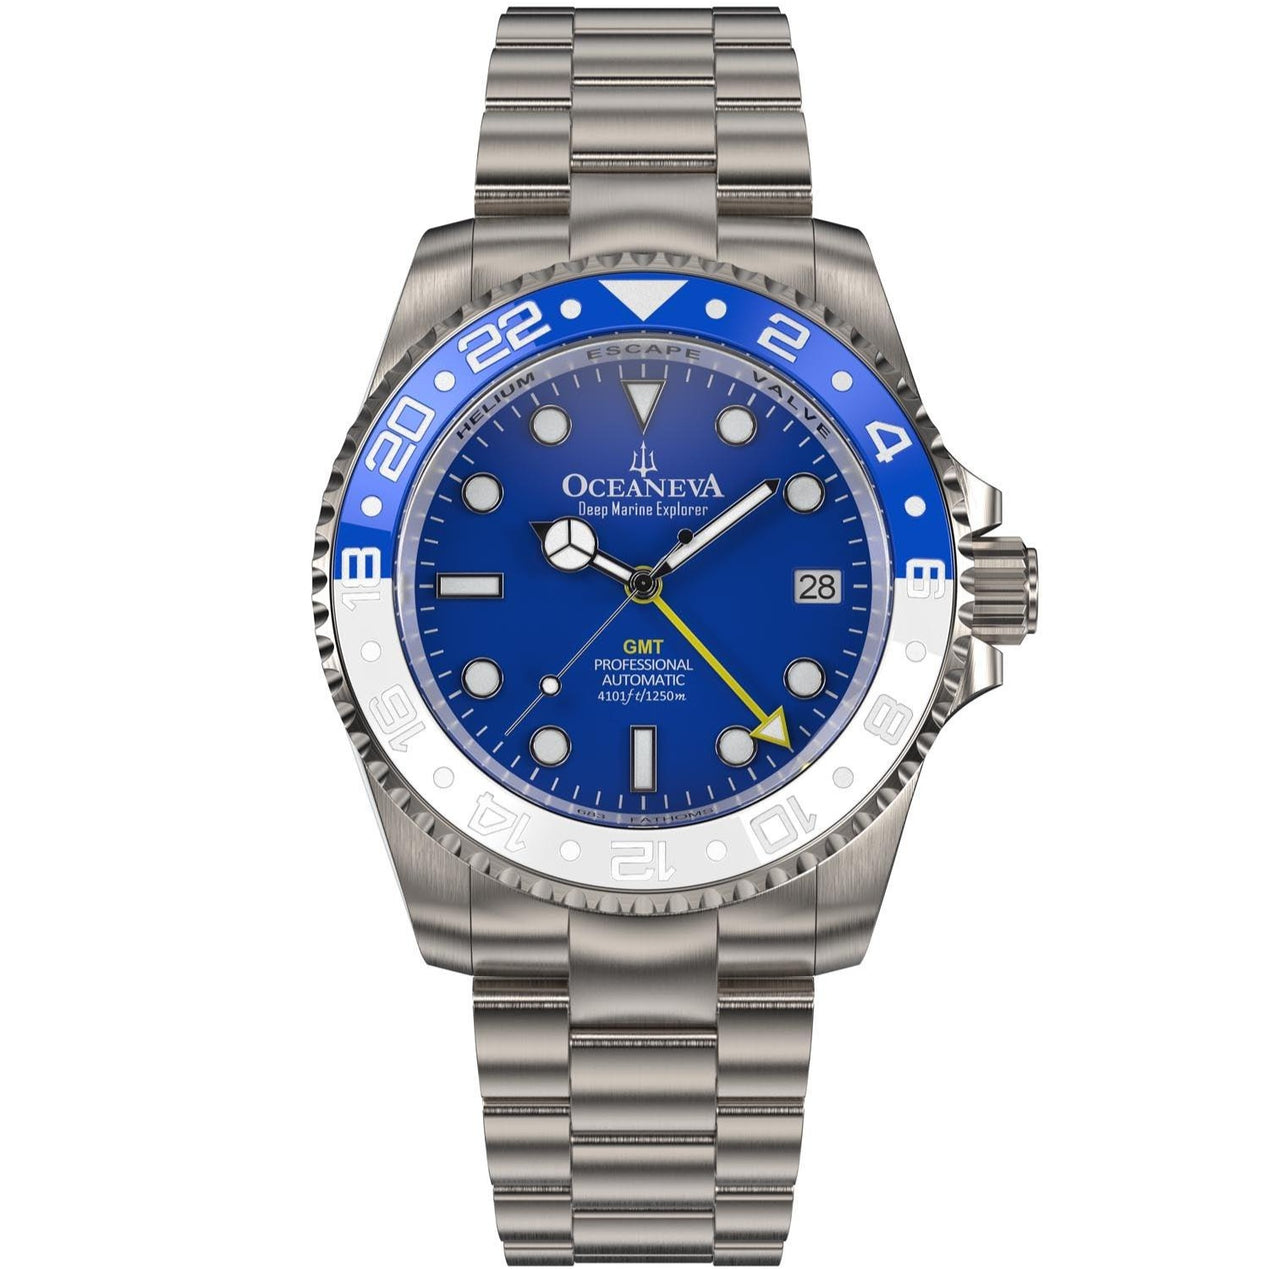 Oceaneva Titanium Watch with blue and white ceramic bezel